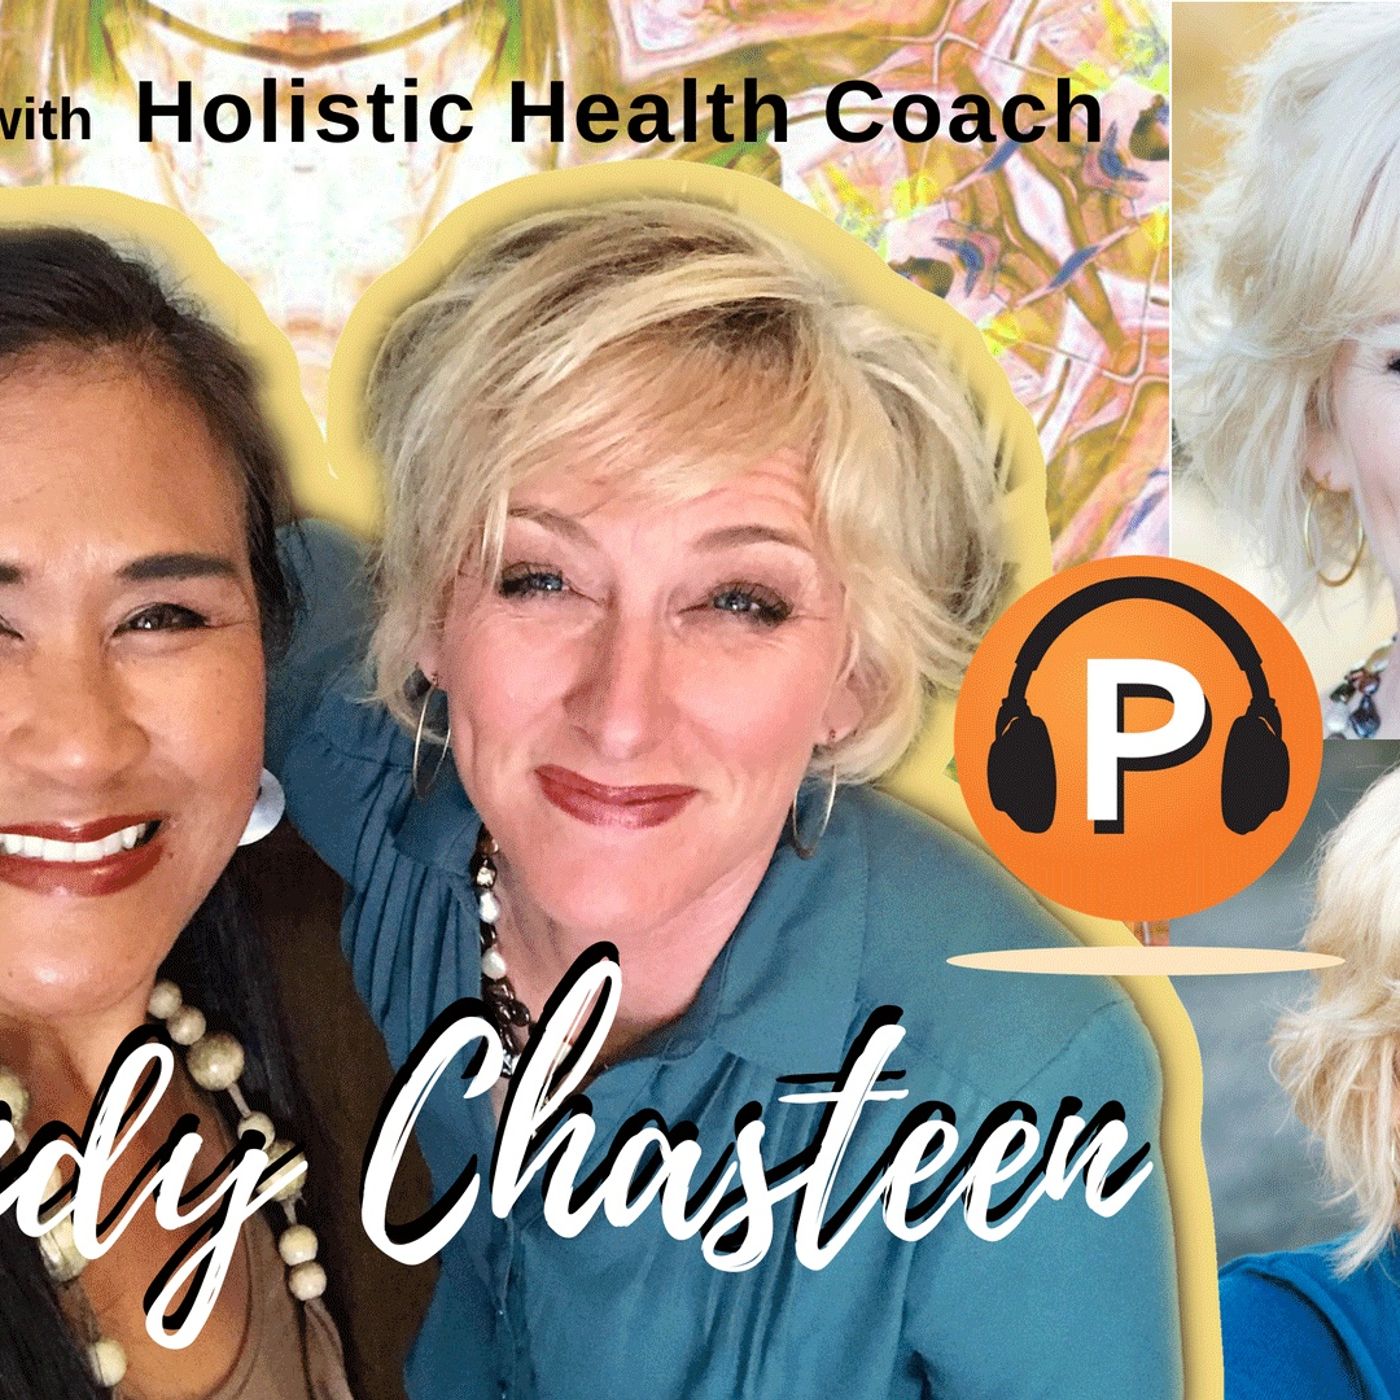 Episode 33 - Annie Talks with Holistic Health Coach Sandy Chasteen